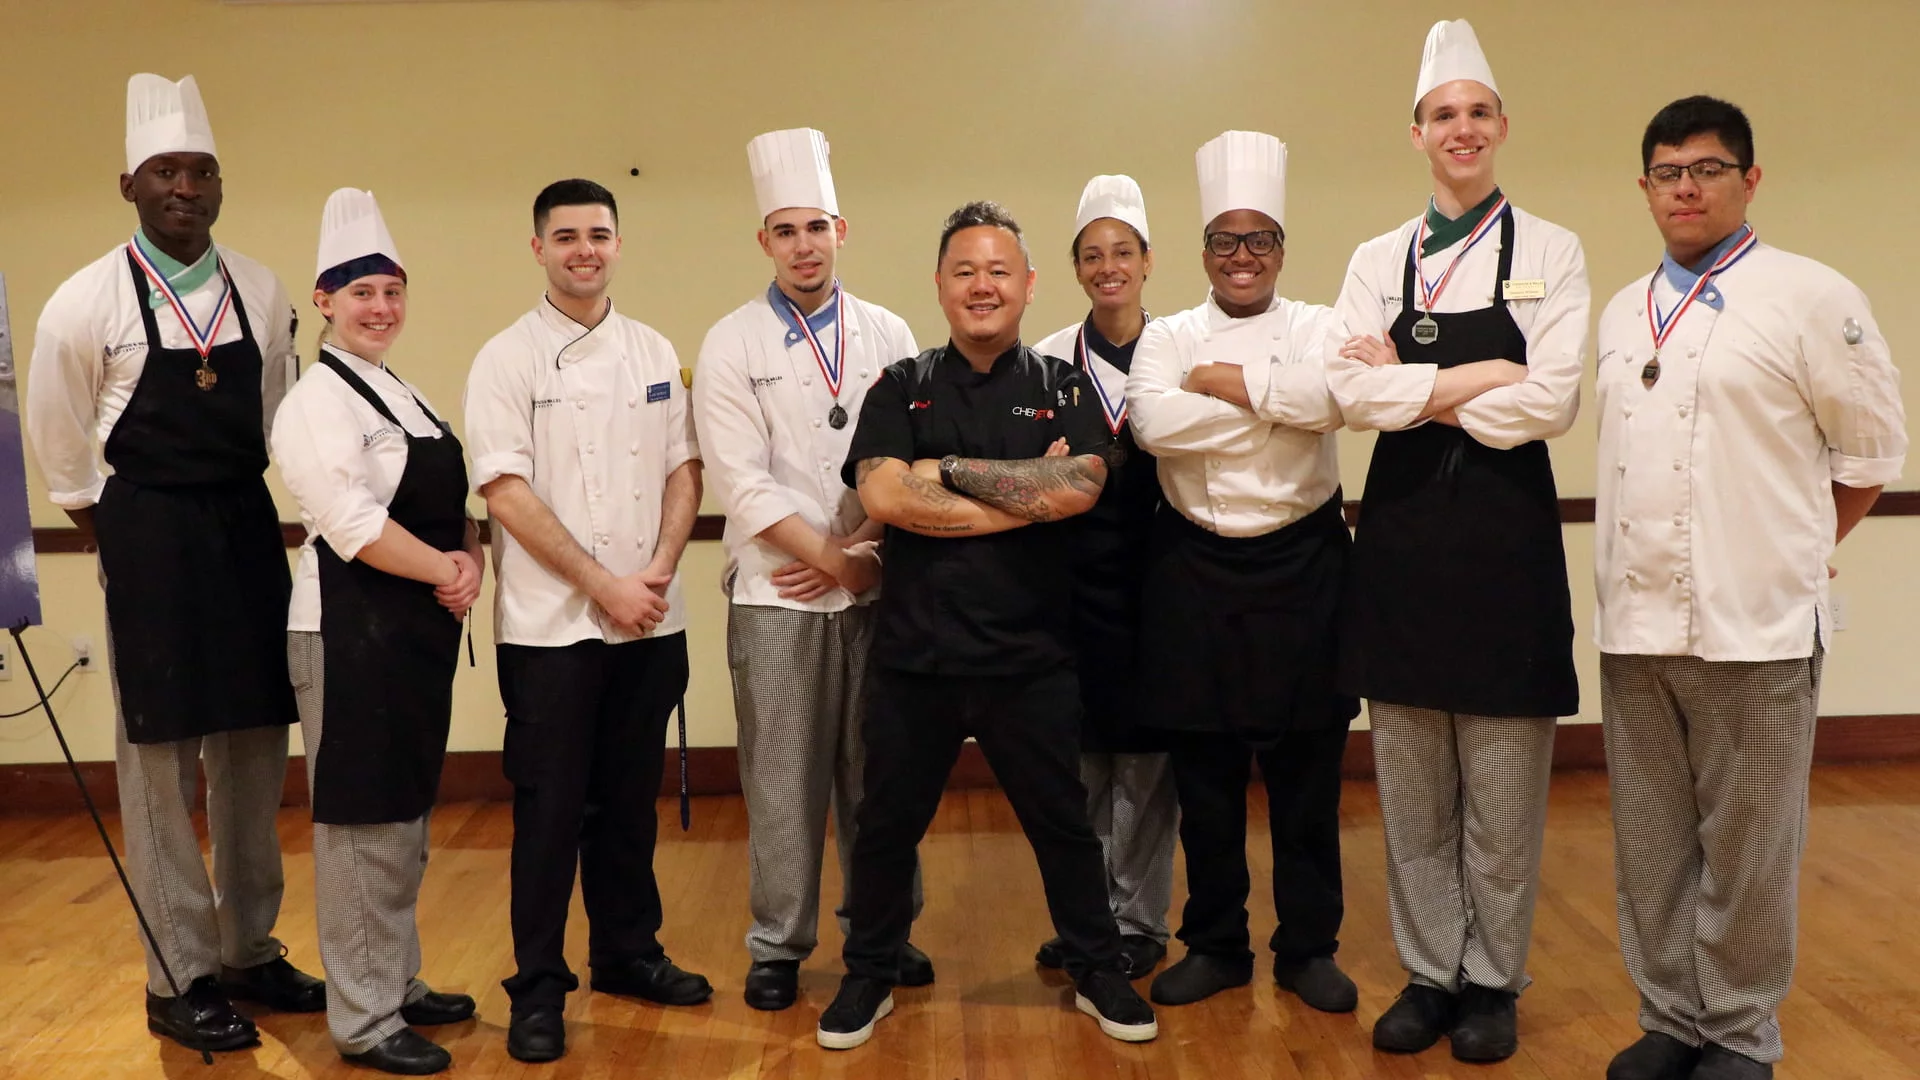 JWU culinary contestants pose with Chef Jet Tila.